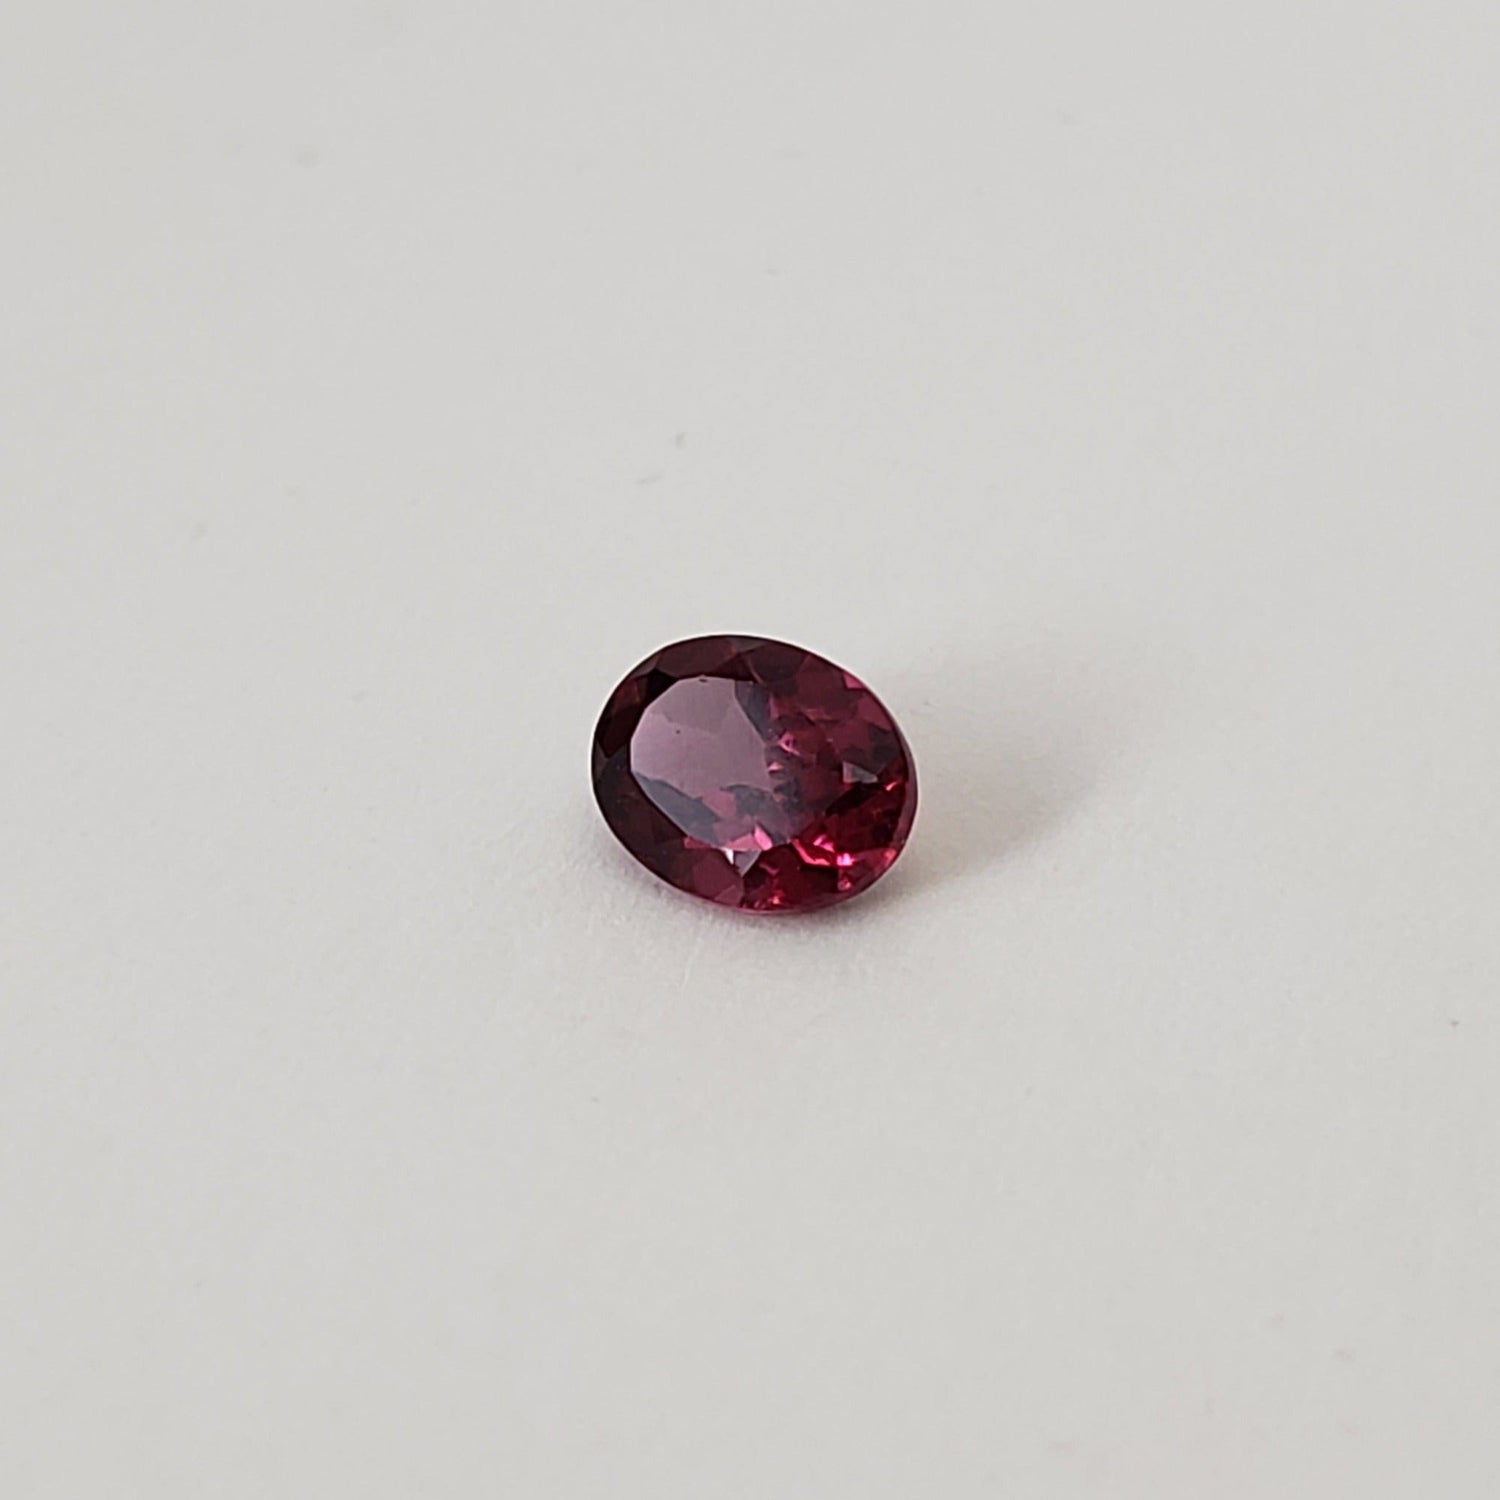 Rhodolite Garnet | Untreated Garnet | Oval Cut | Reddish Purple | 5.3x4.1mm | Tanzania